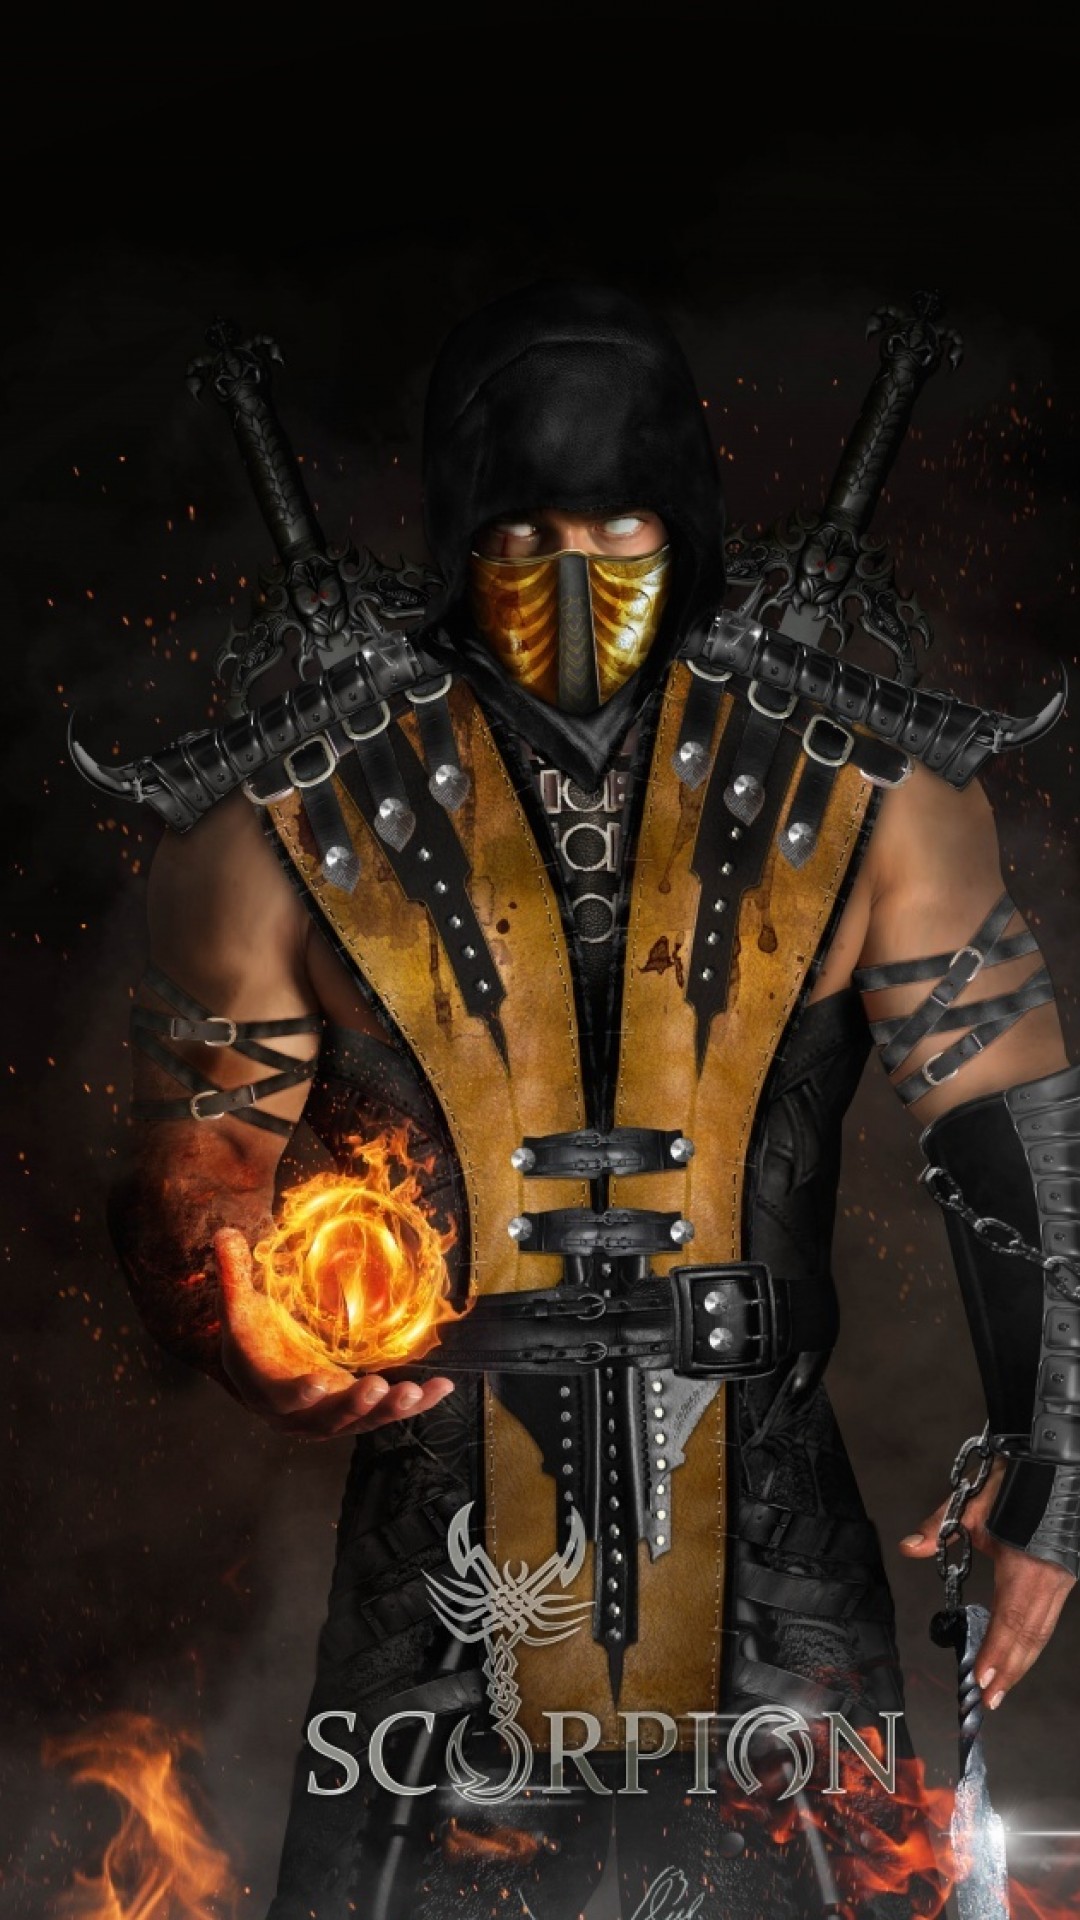 Scorpion Cool Mortal Kombat X HD Wallpaper for Desktop and Mobiles iPhone 6 / 6S Plus